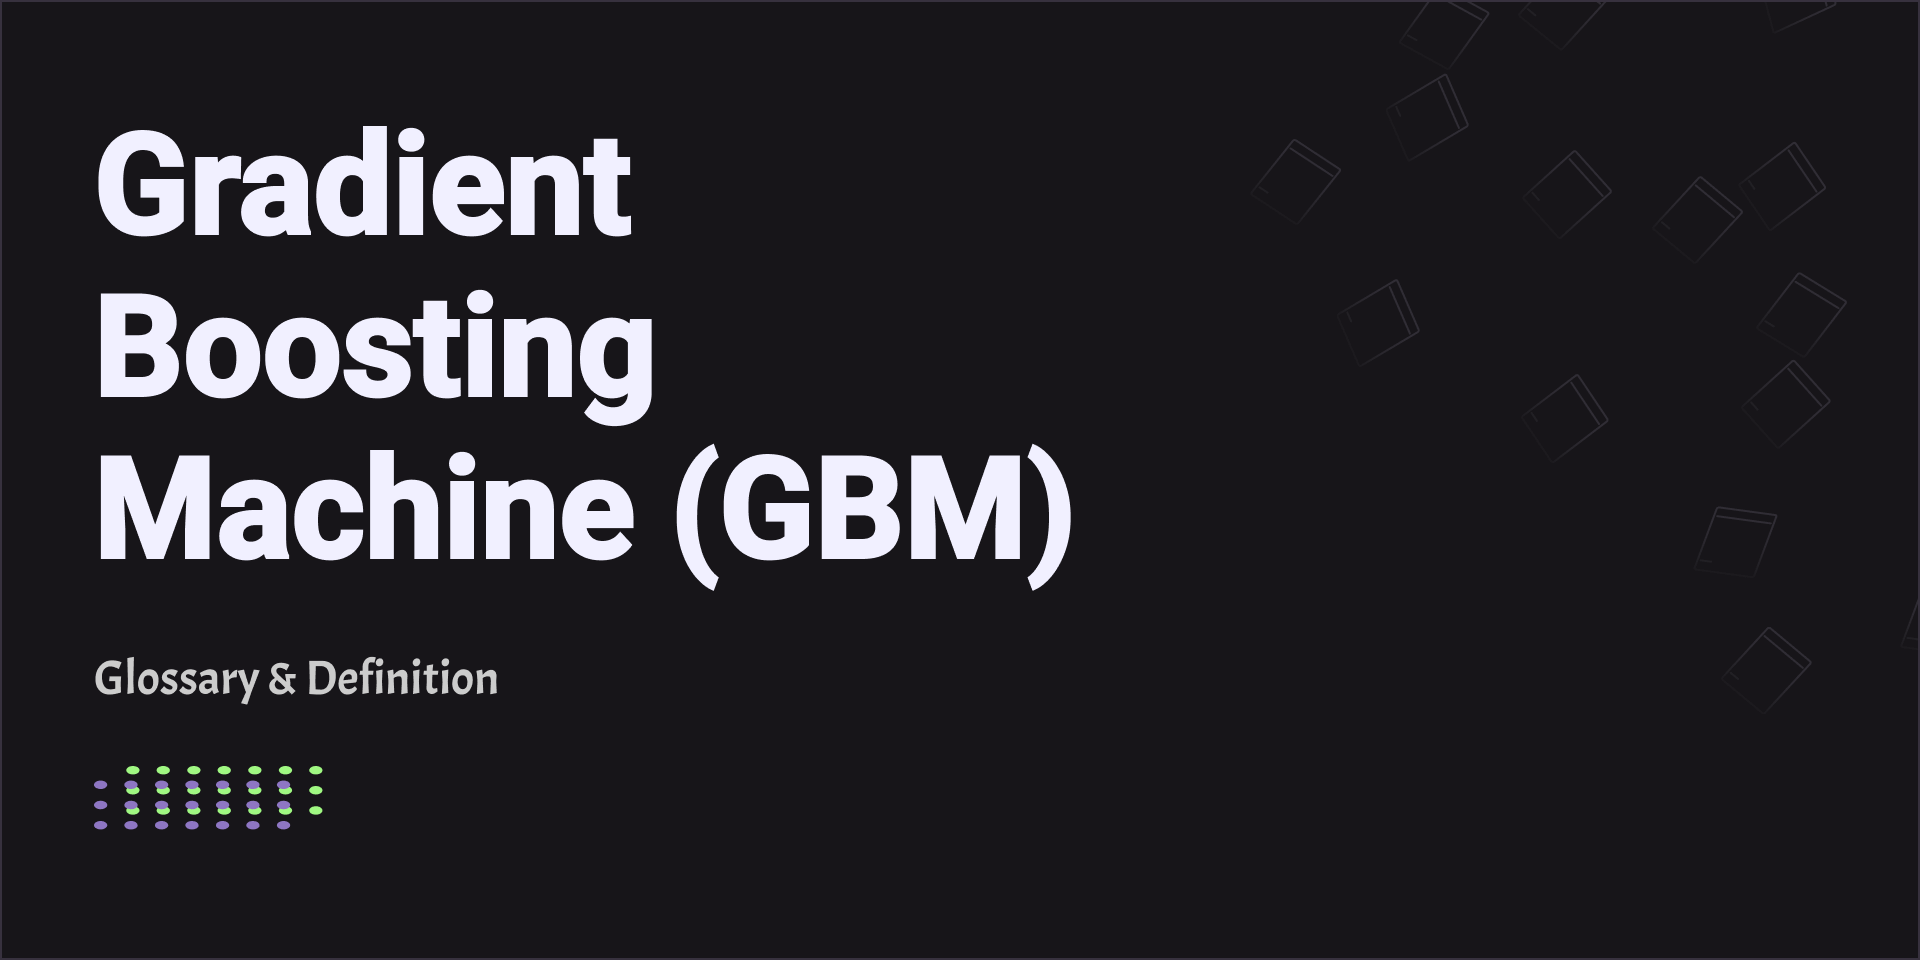 Gradient Boosting Machine (GBM)